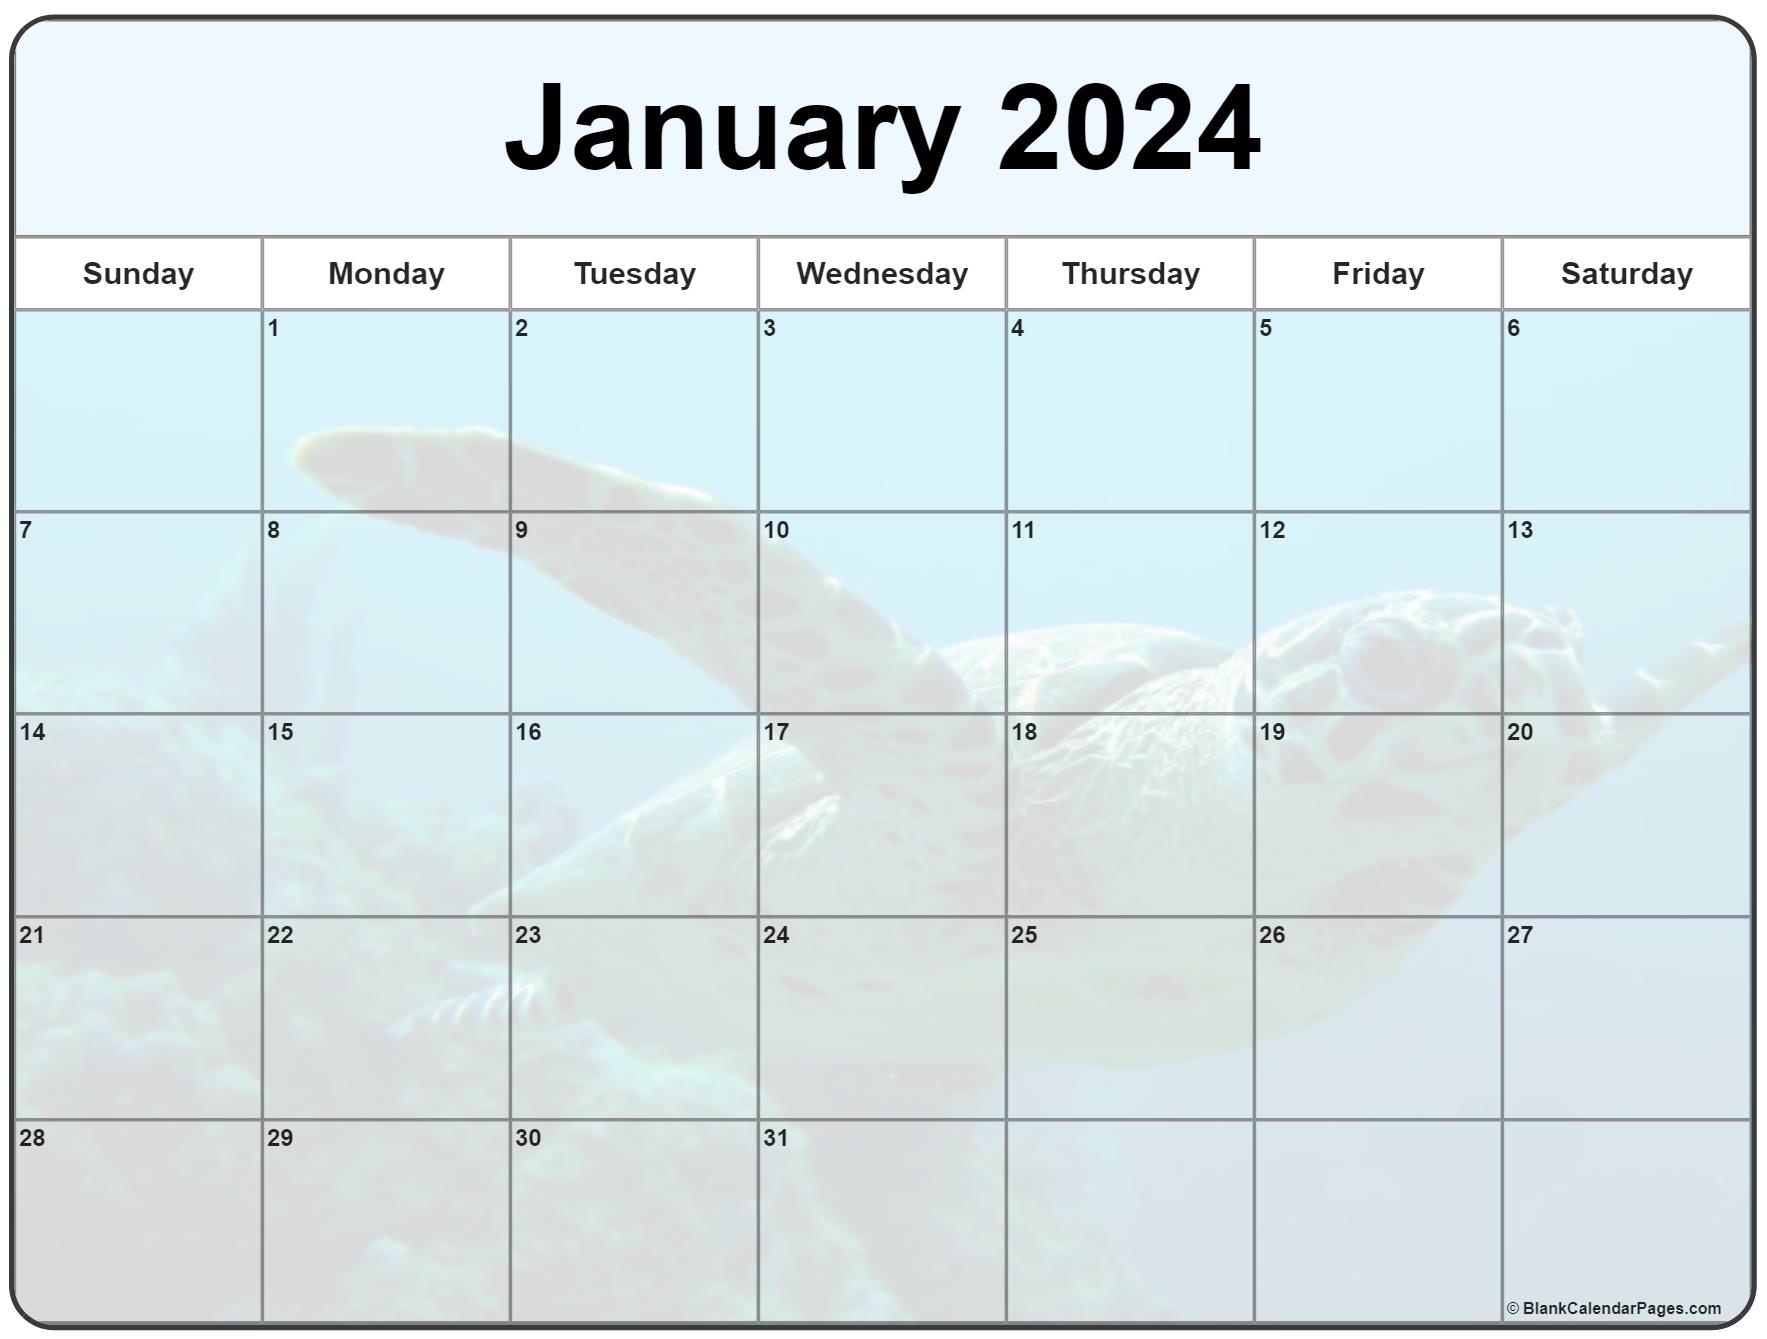 january-2024-calendar-events-cool-the-best-list-of-school-calendar-dates-2024